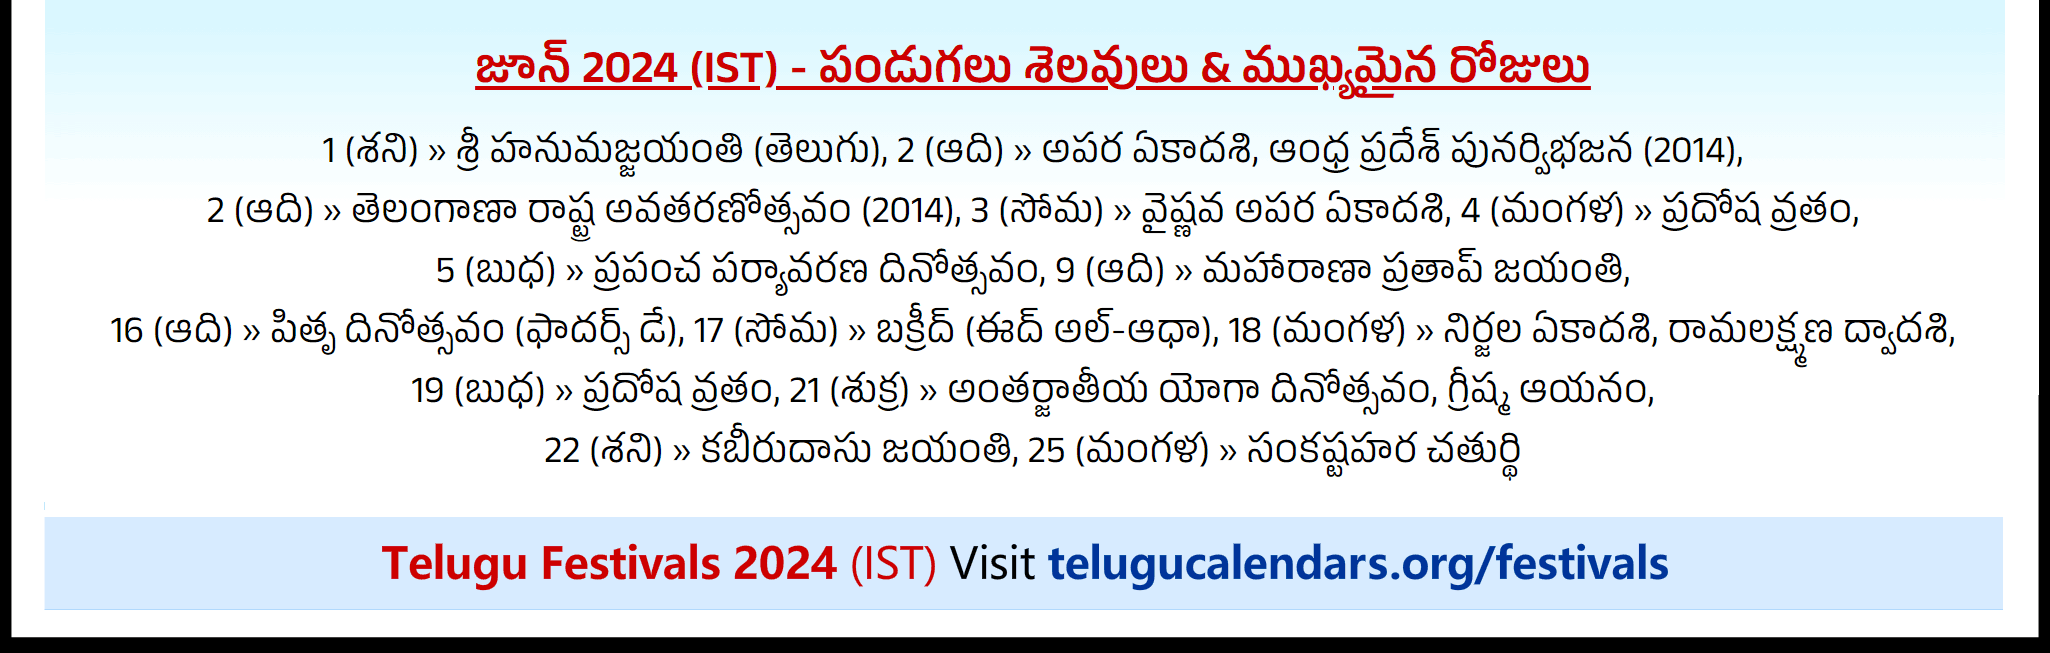 Telugu Festivals 2024 June London